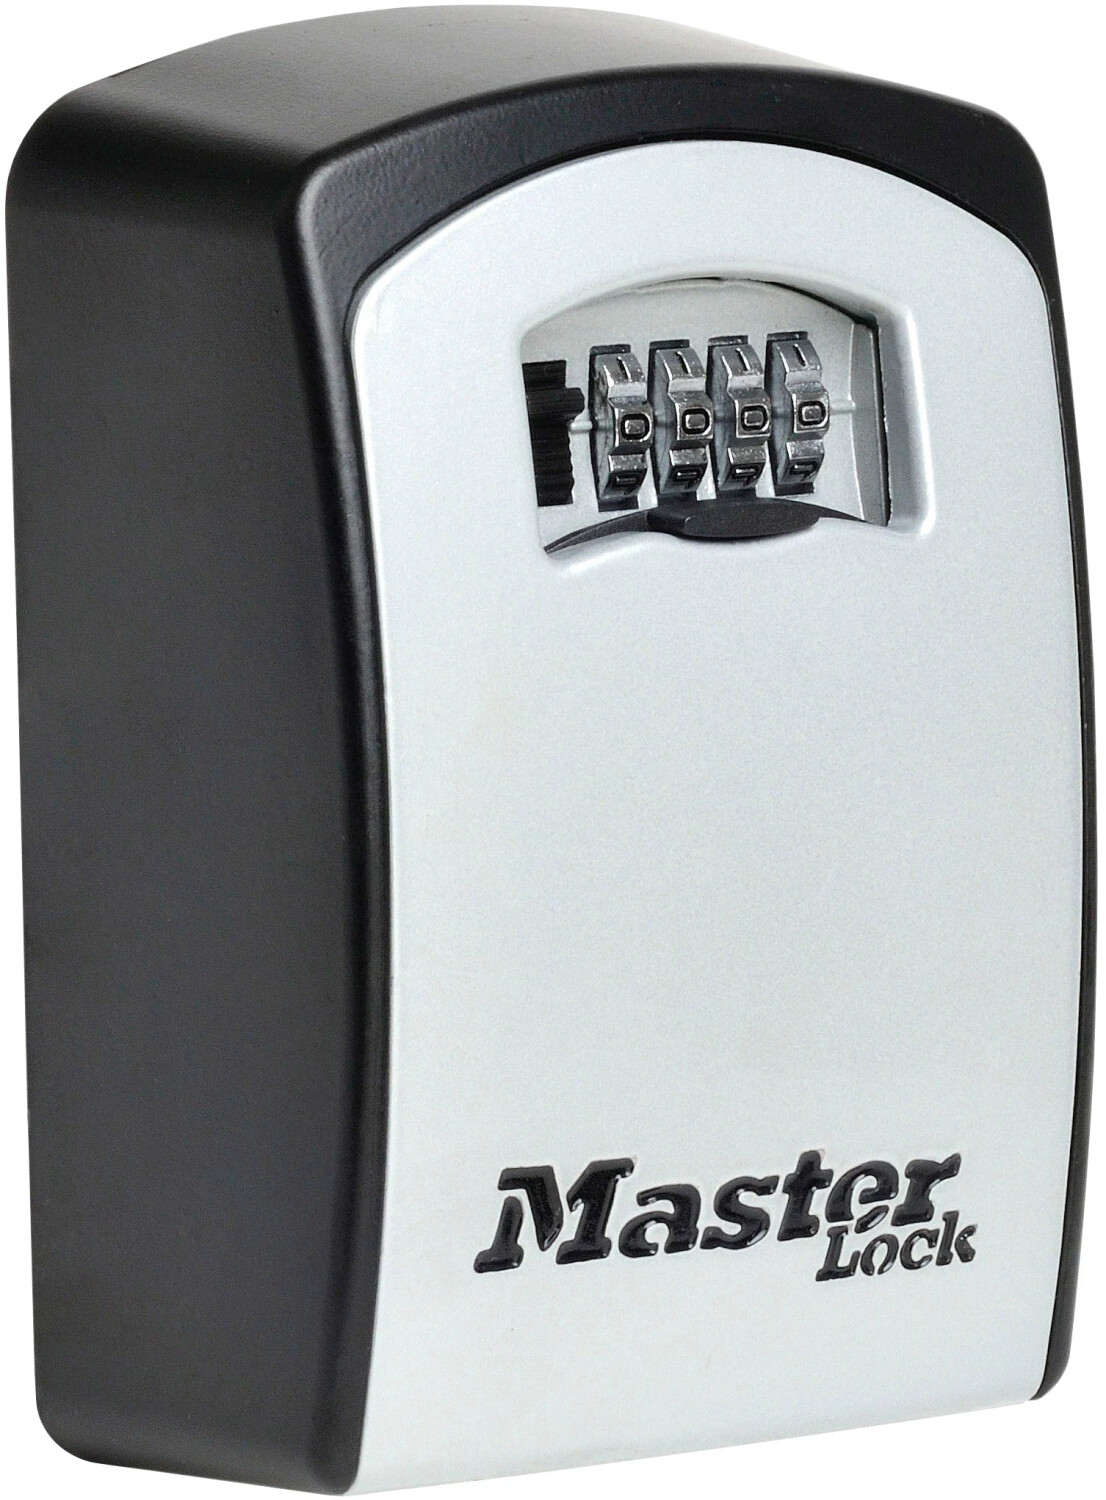 Master Lock Wall Mount Key Storage Security Lock (6 Keys)